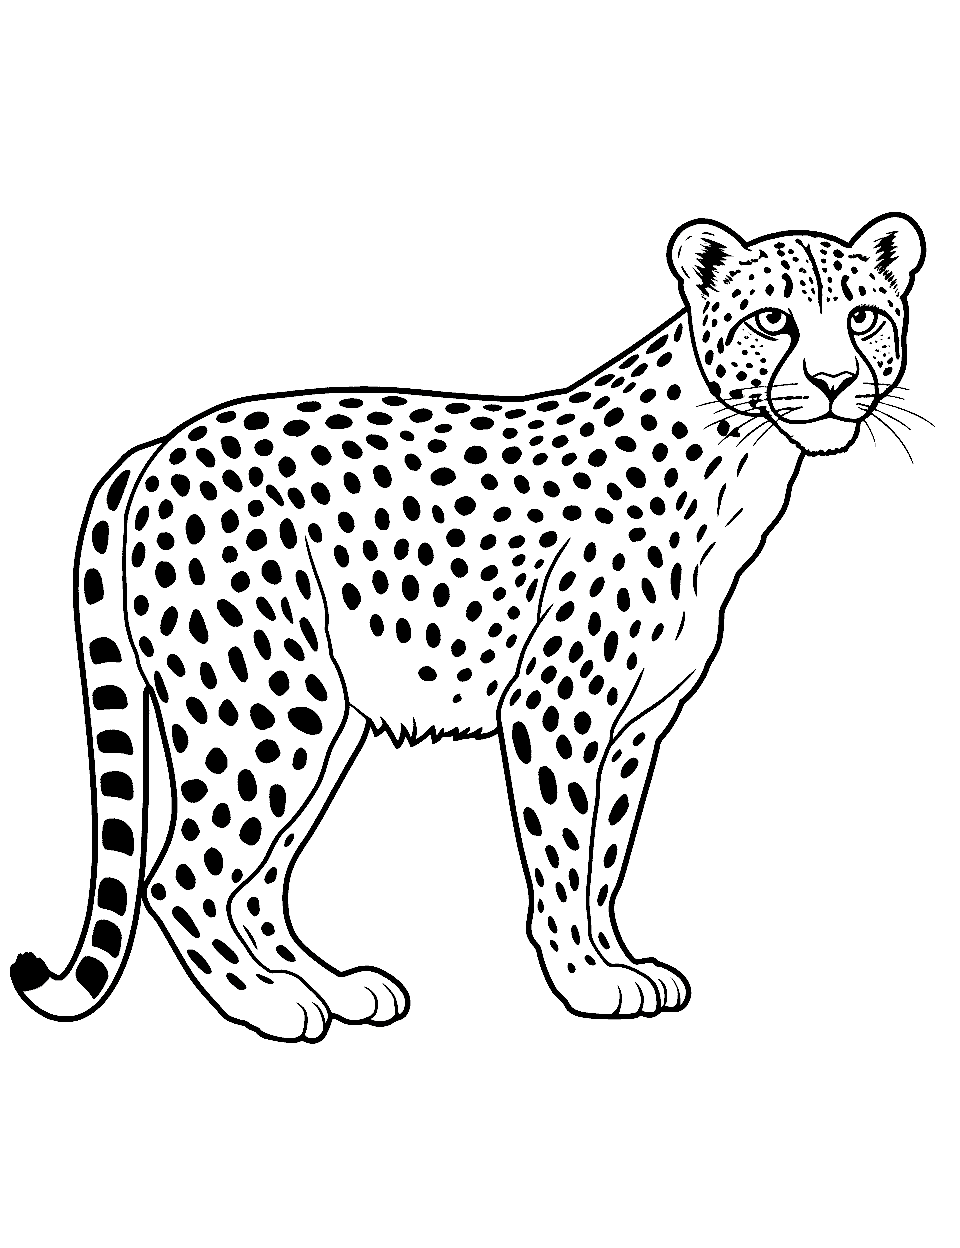 Acinonyx Jubatus in Profile Cheetah Coloring Page - A side profile of the cheetah, scientifically known as Acinonyx jubatus.